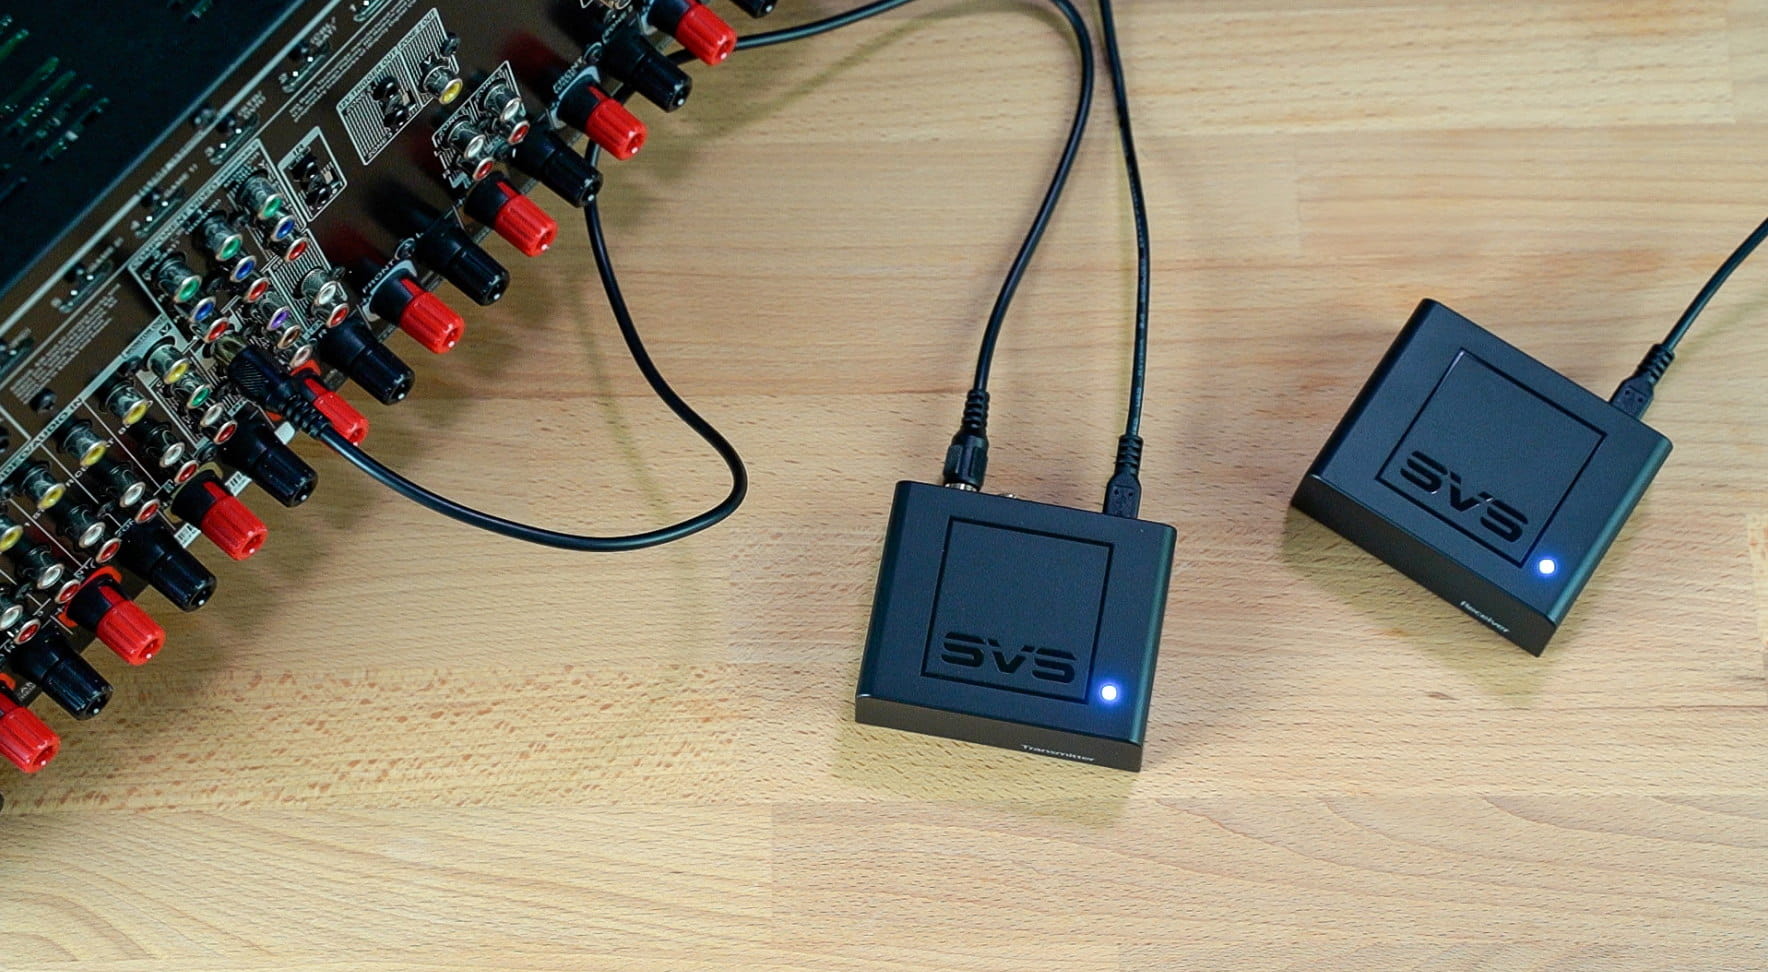 SVS Tri-Band Wireless Audio Adapter